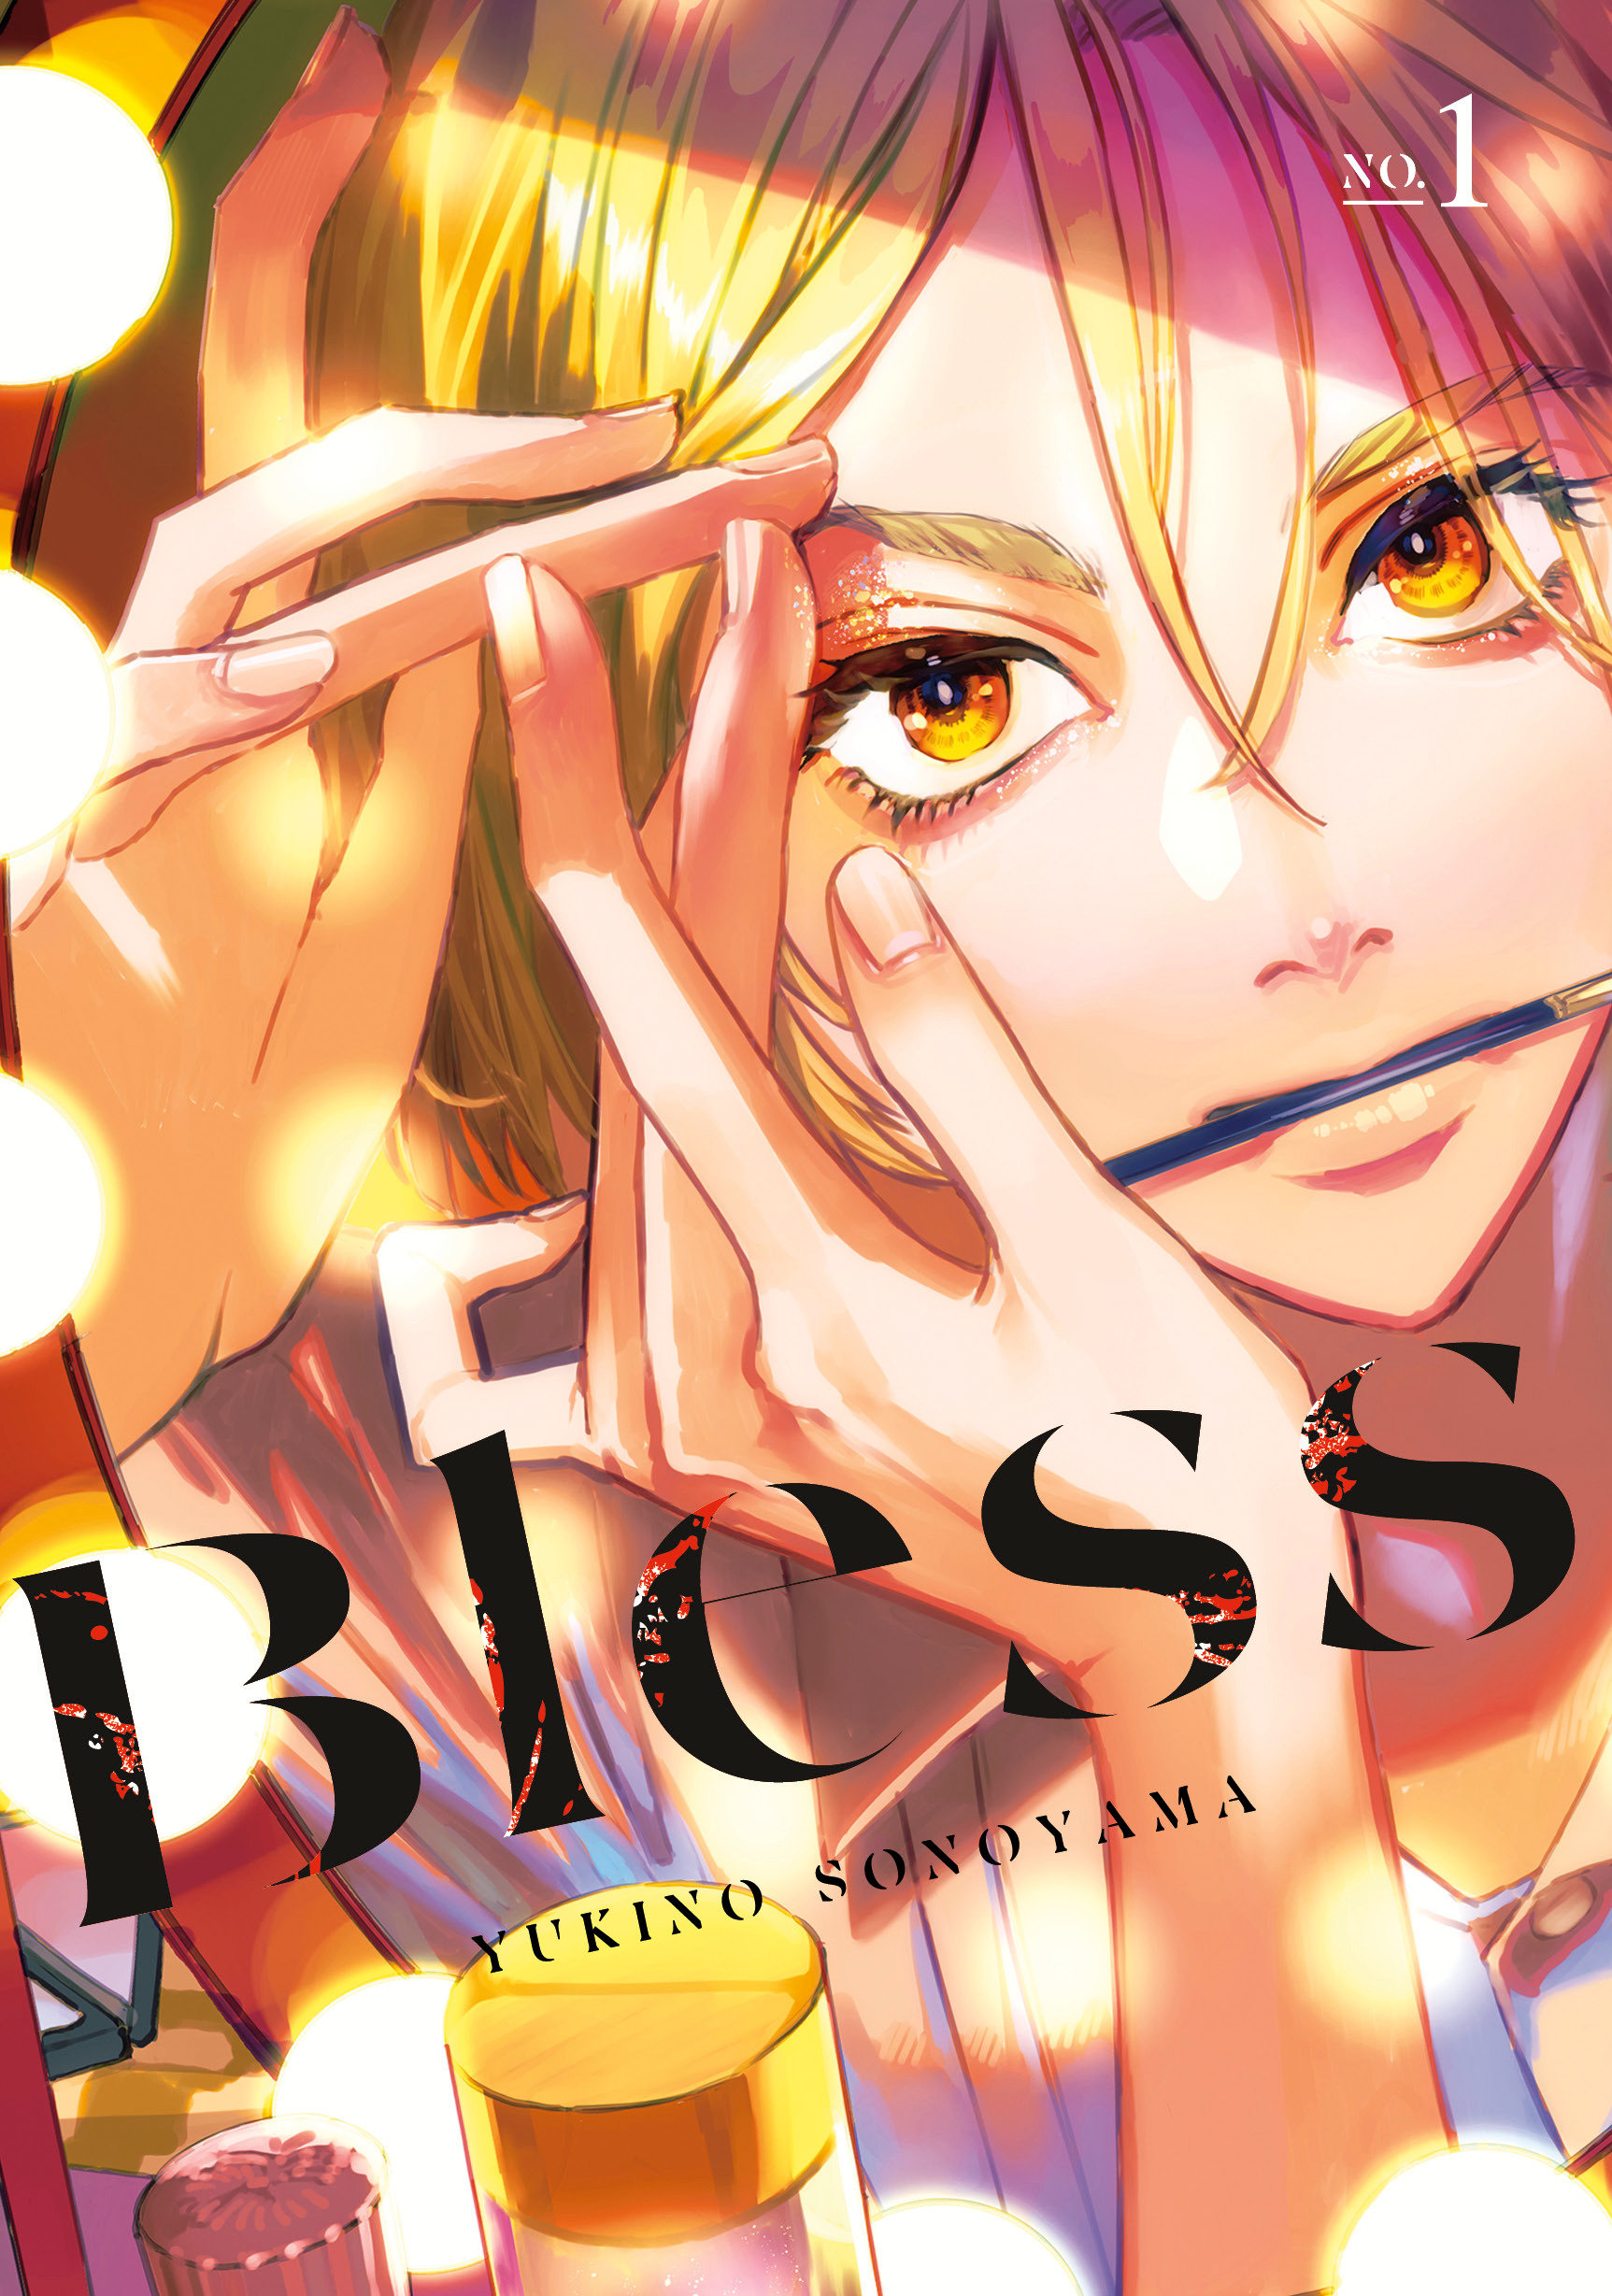 Bless Manga Volume 1